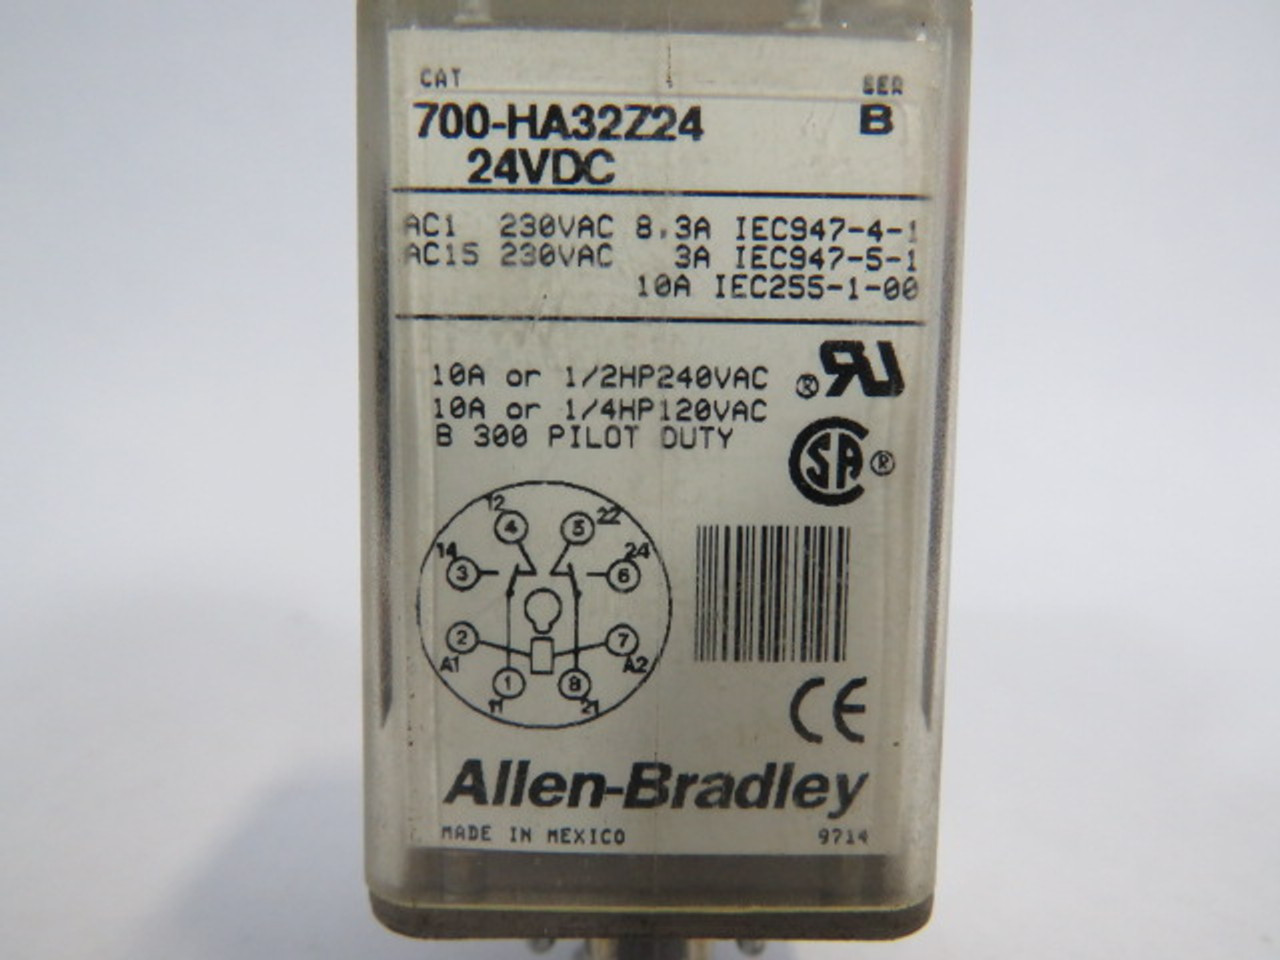 Allen-Bradley 700-HA32Z24 Relay SER B 24VDC 10A USED